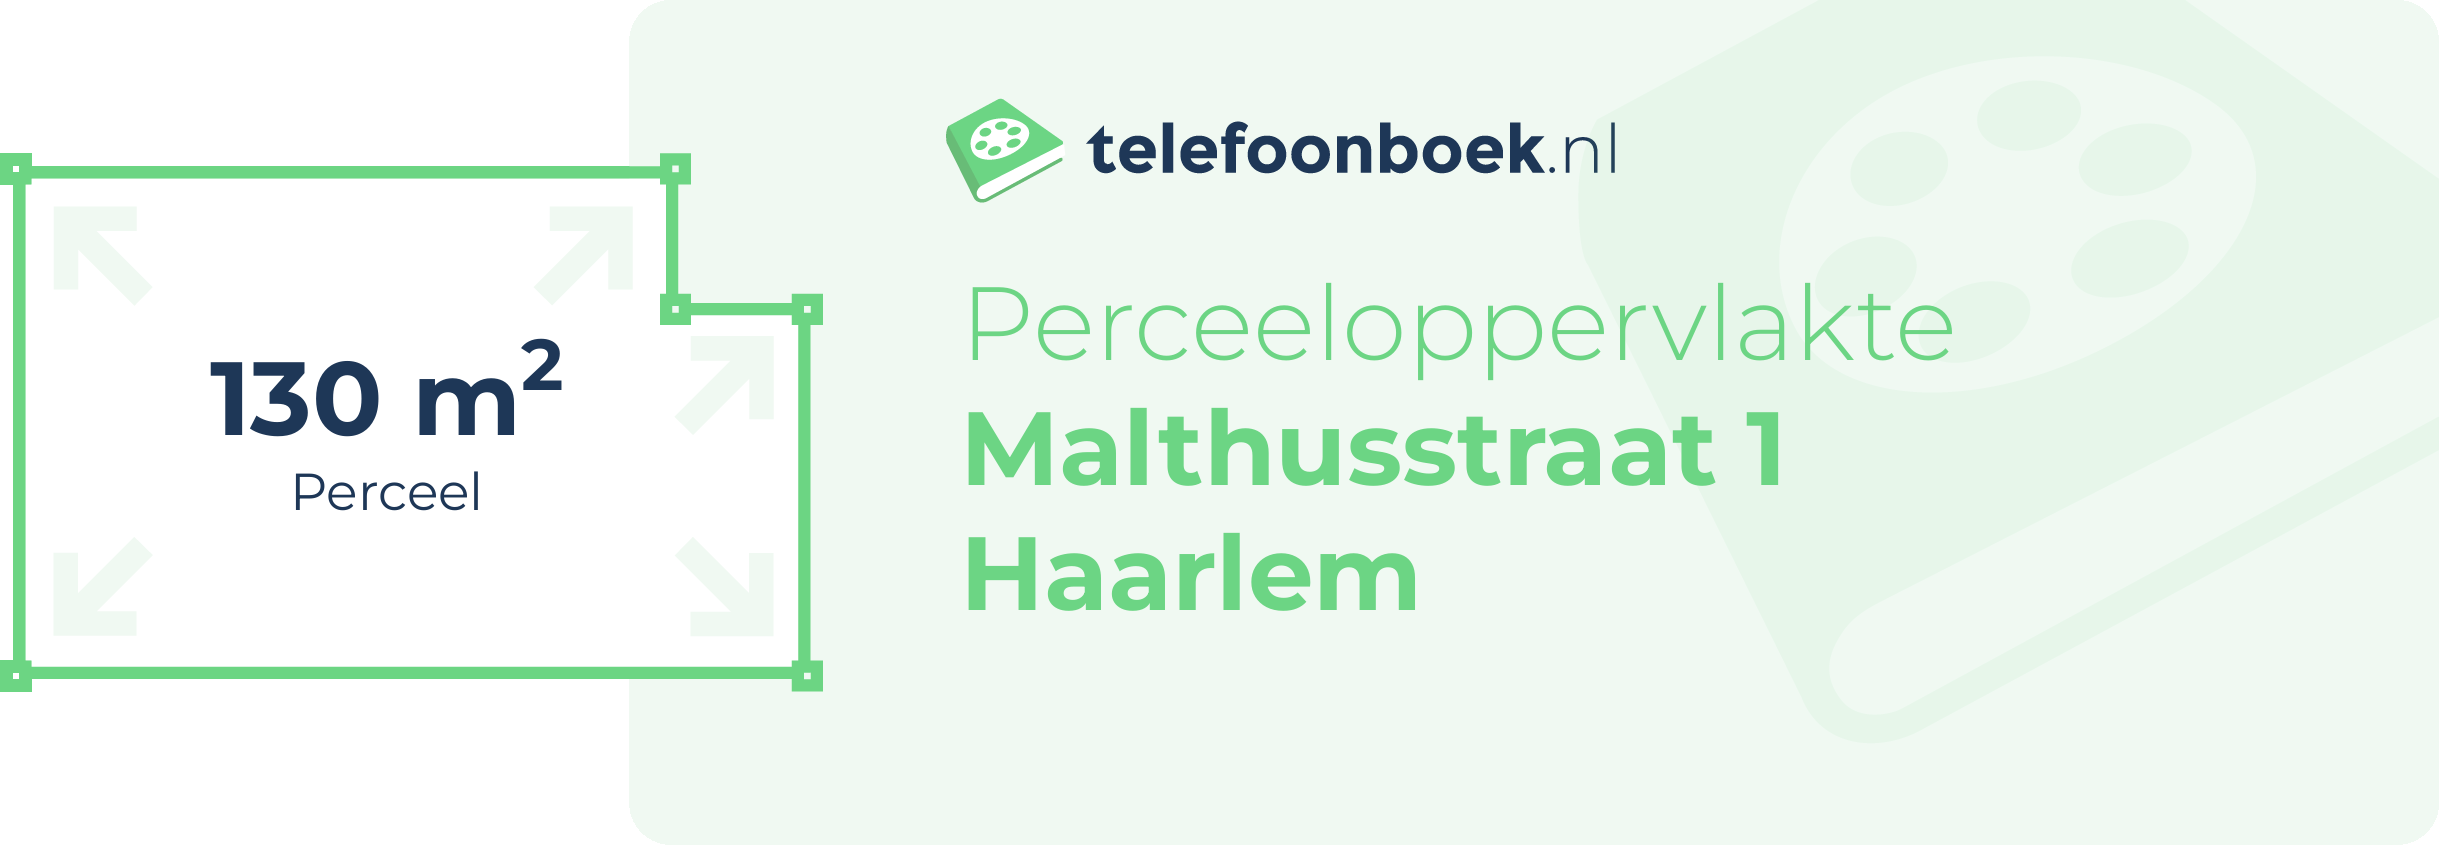 Perceeloppervlakte Malthusstraat 1 Haarlem